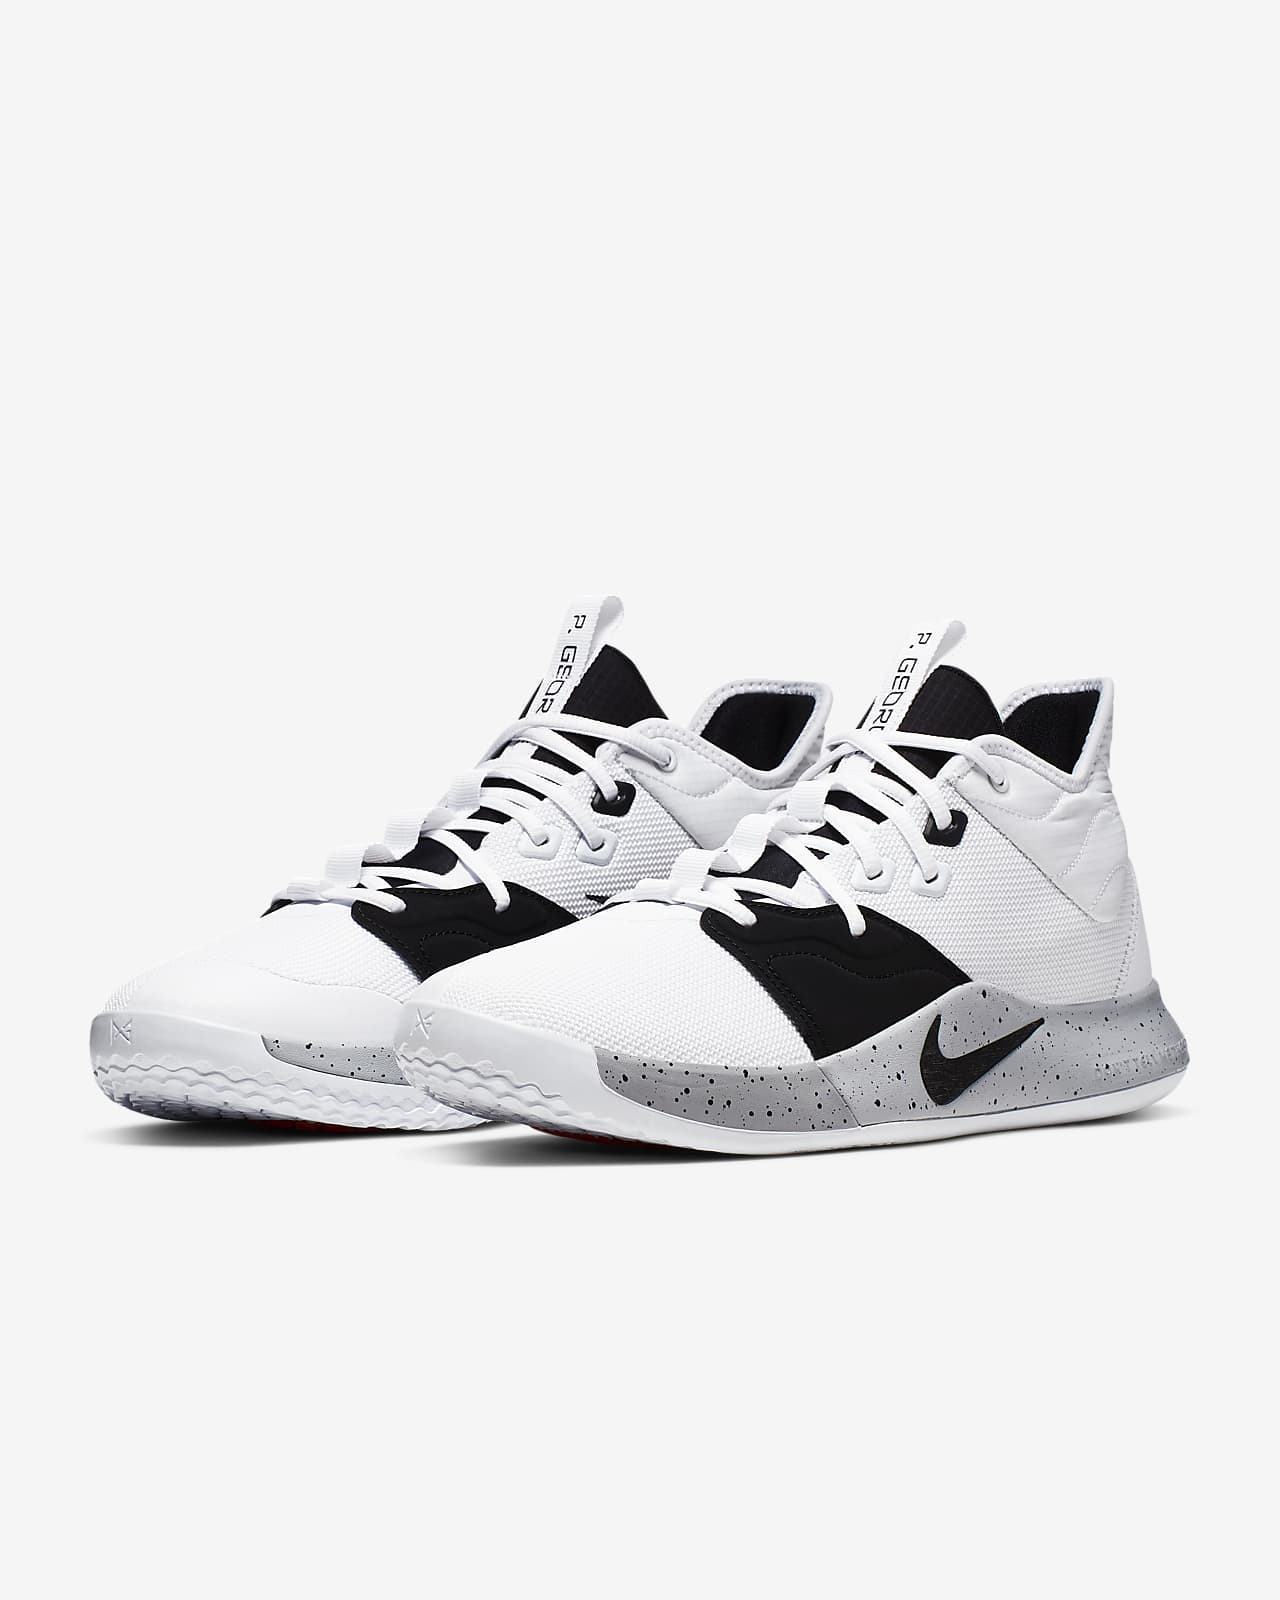 PG 3 Basketball Shoe. Nike CA